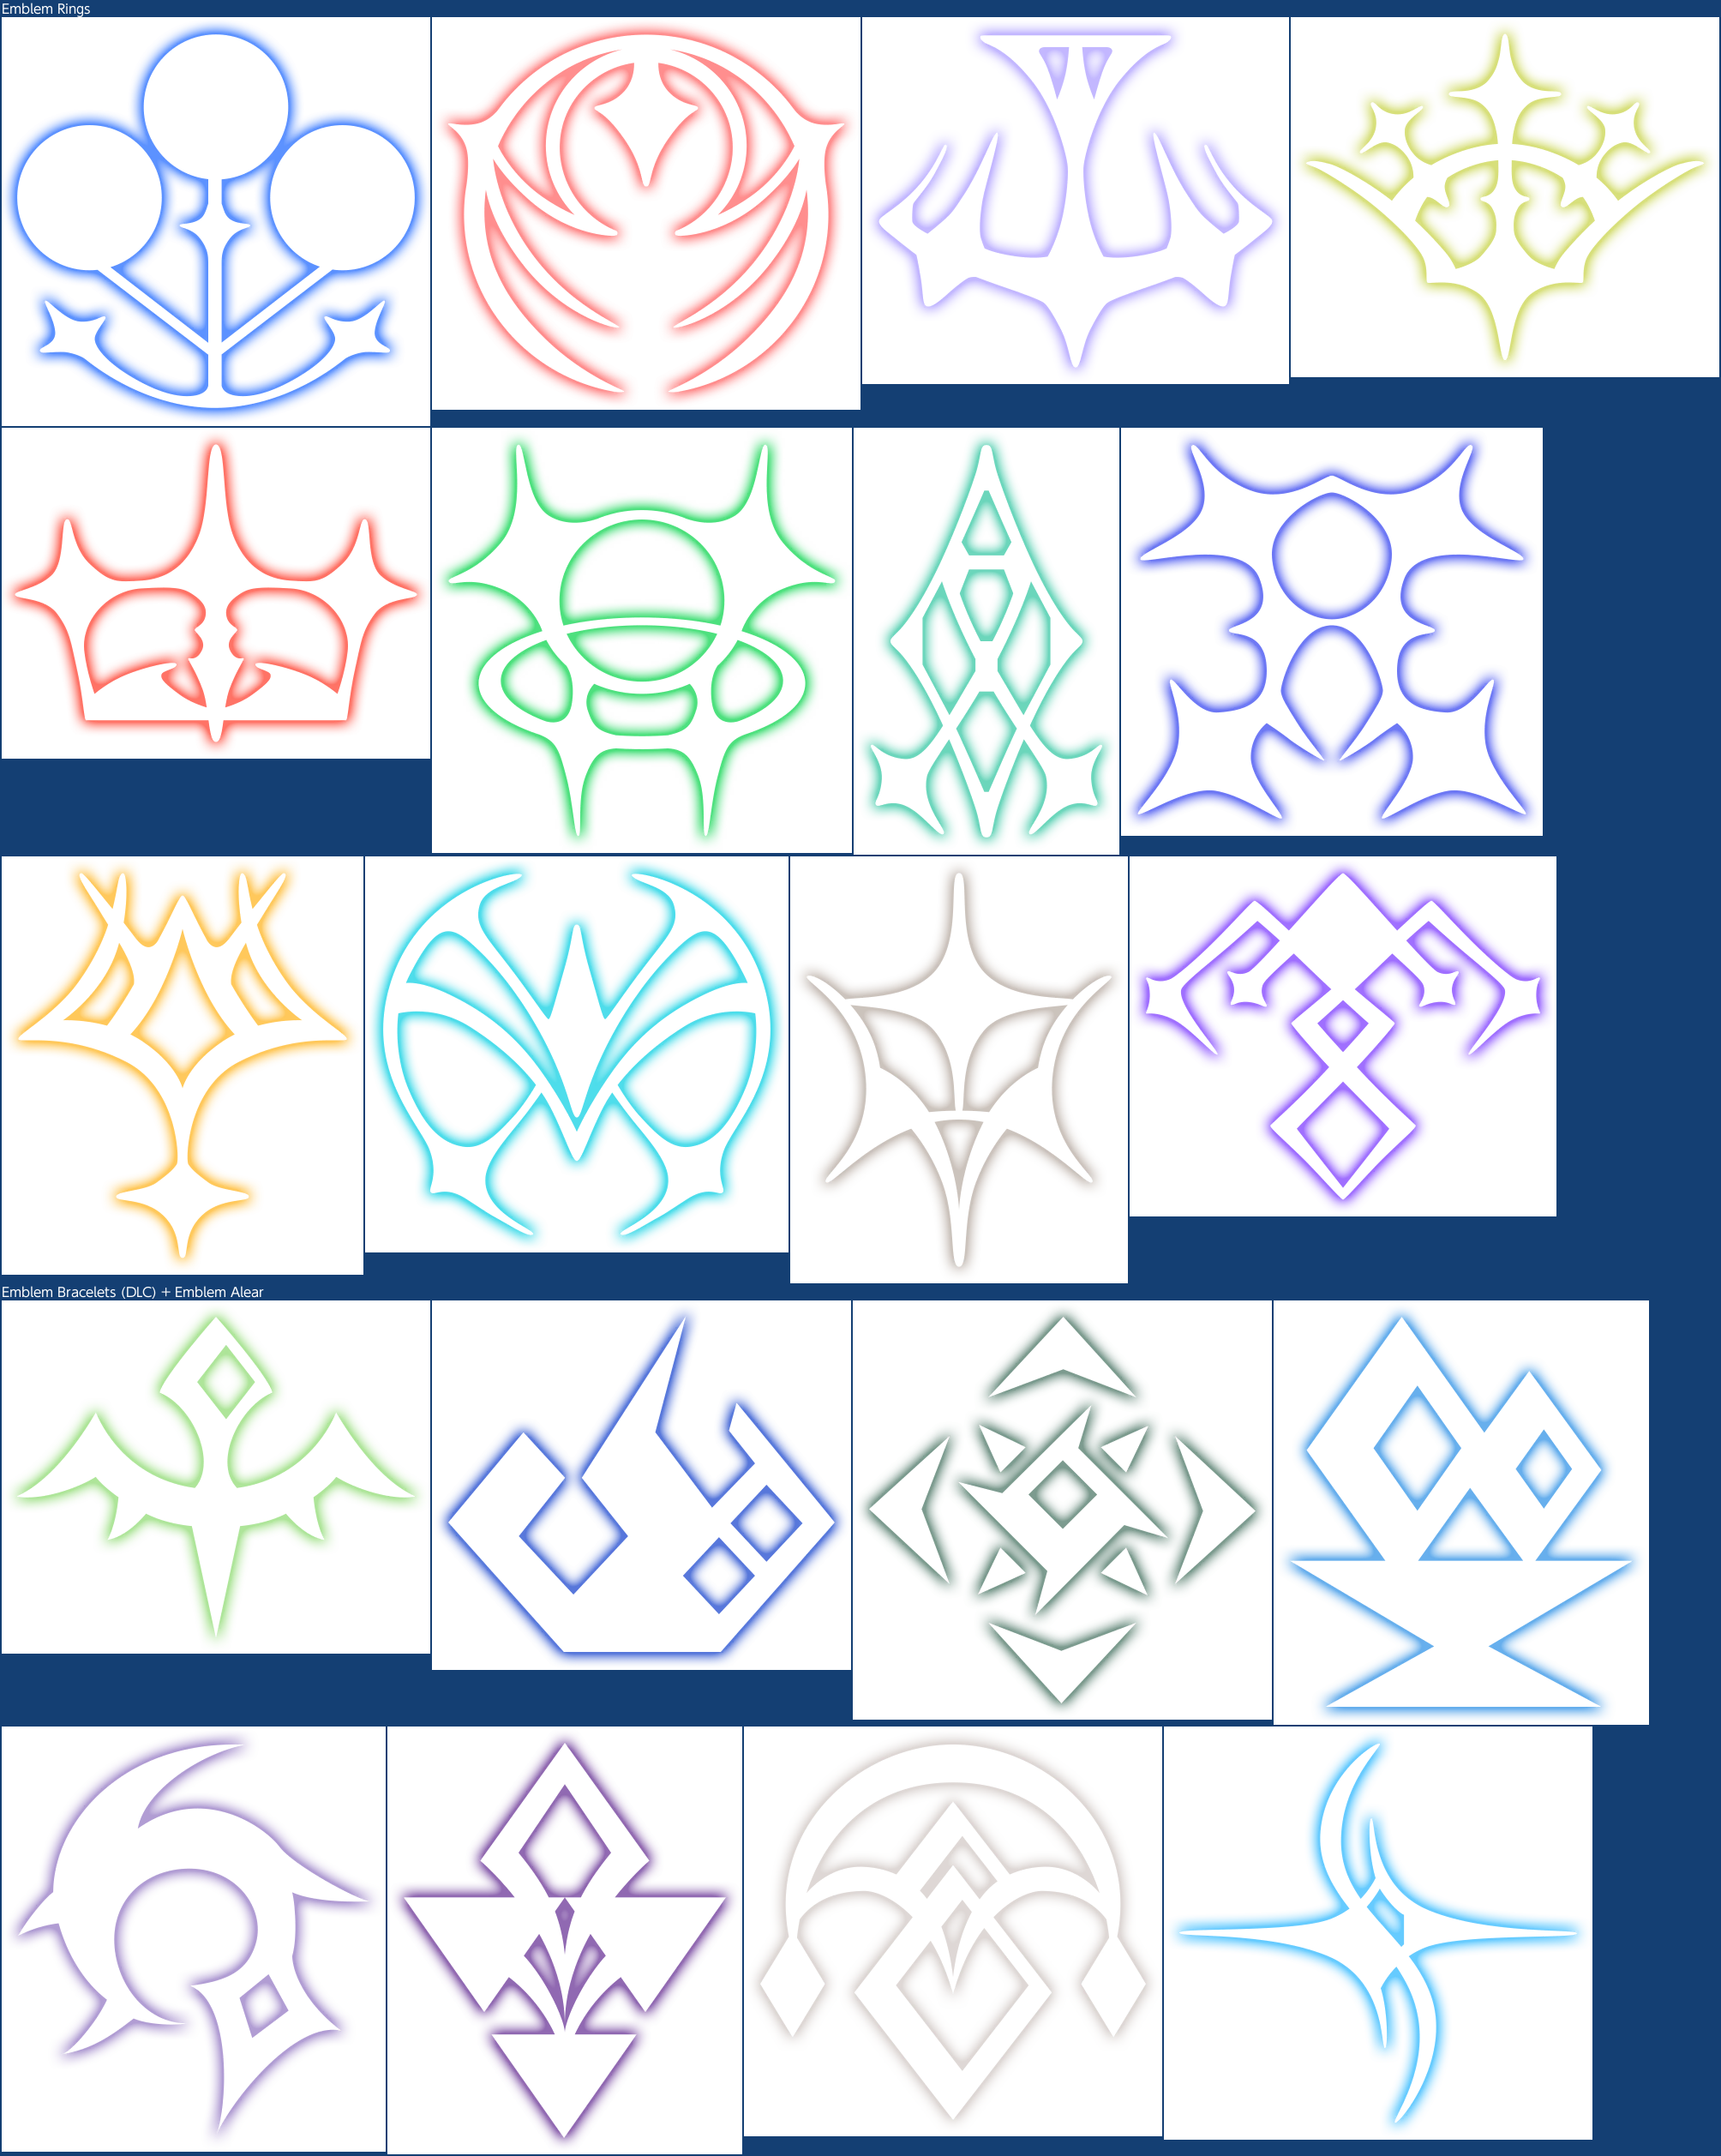 Shops - Emblem Symbols (Large)